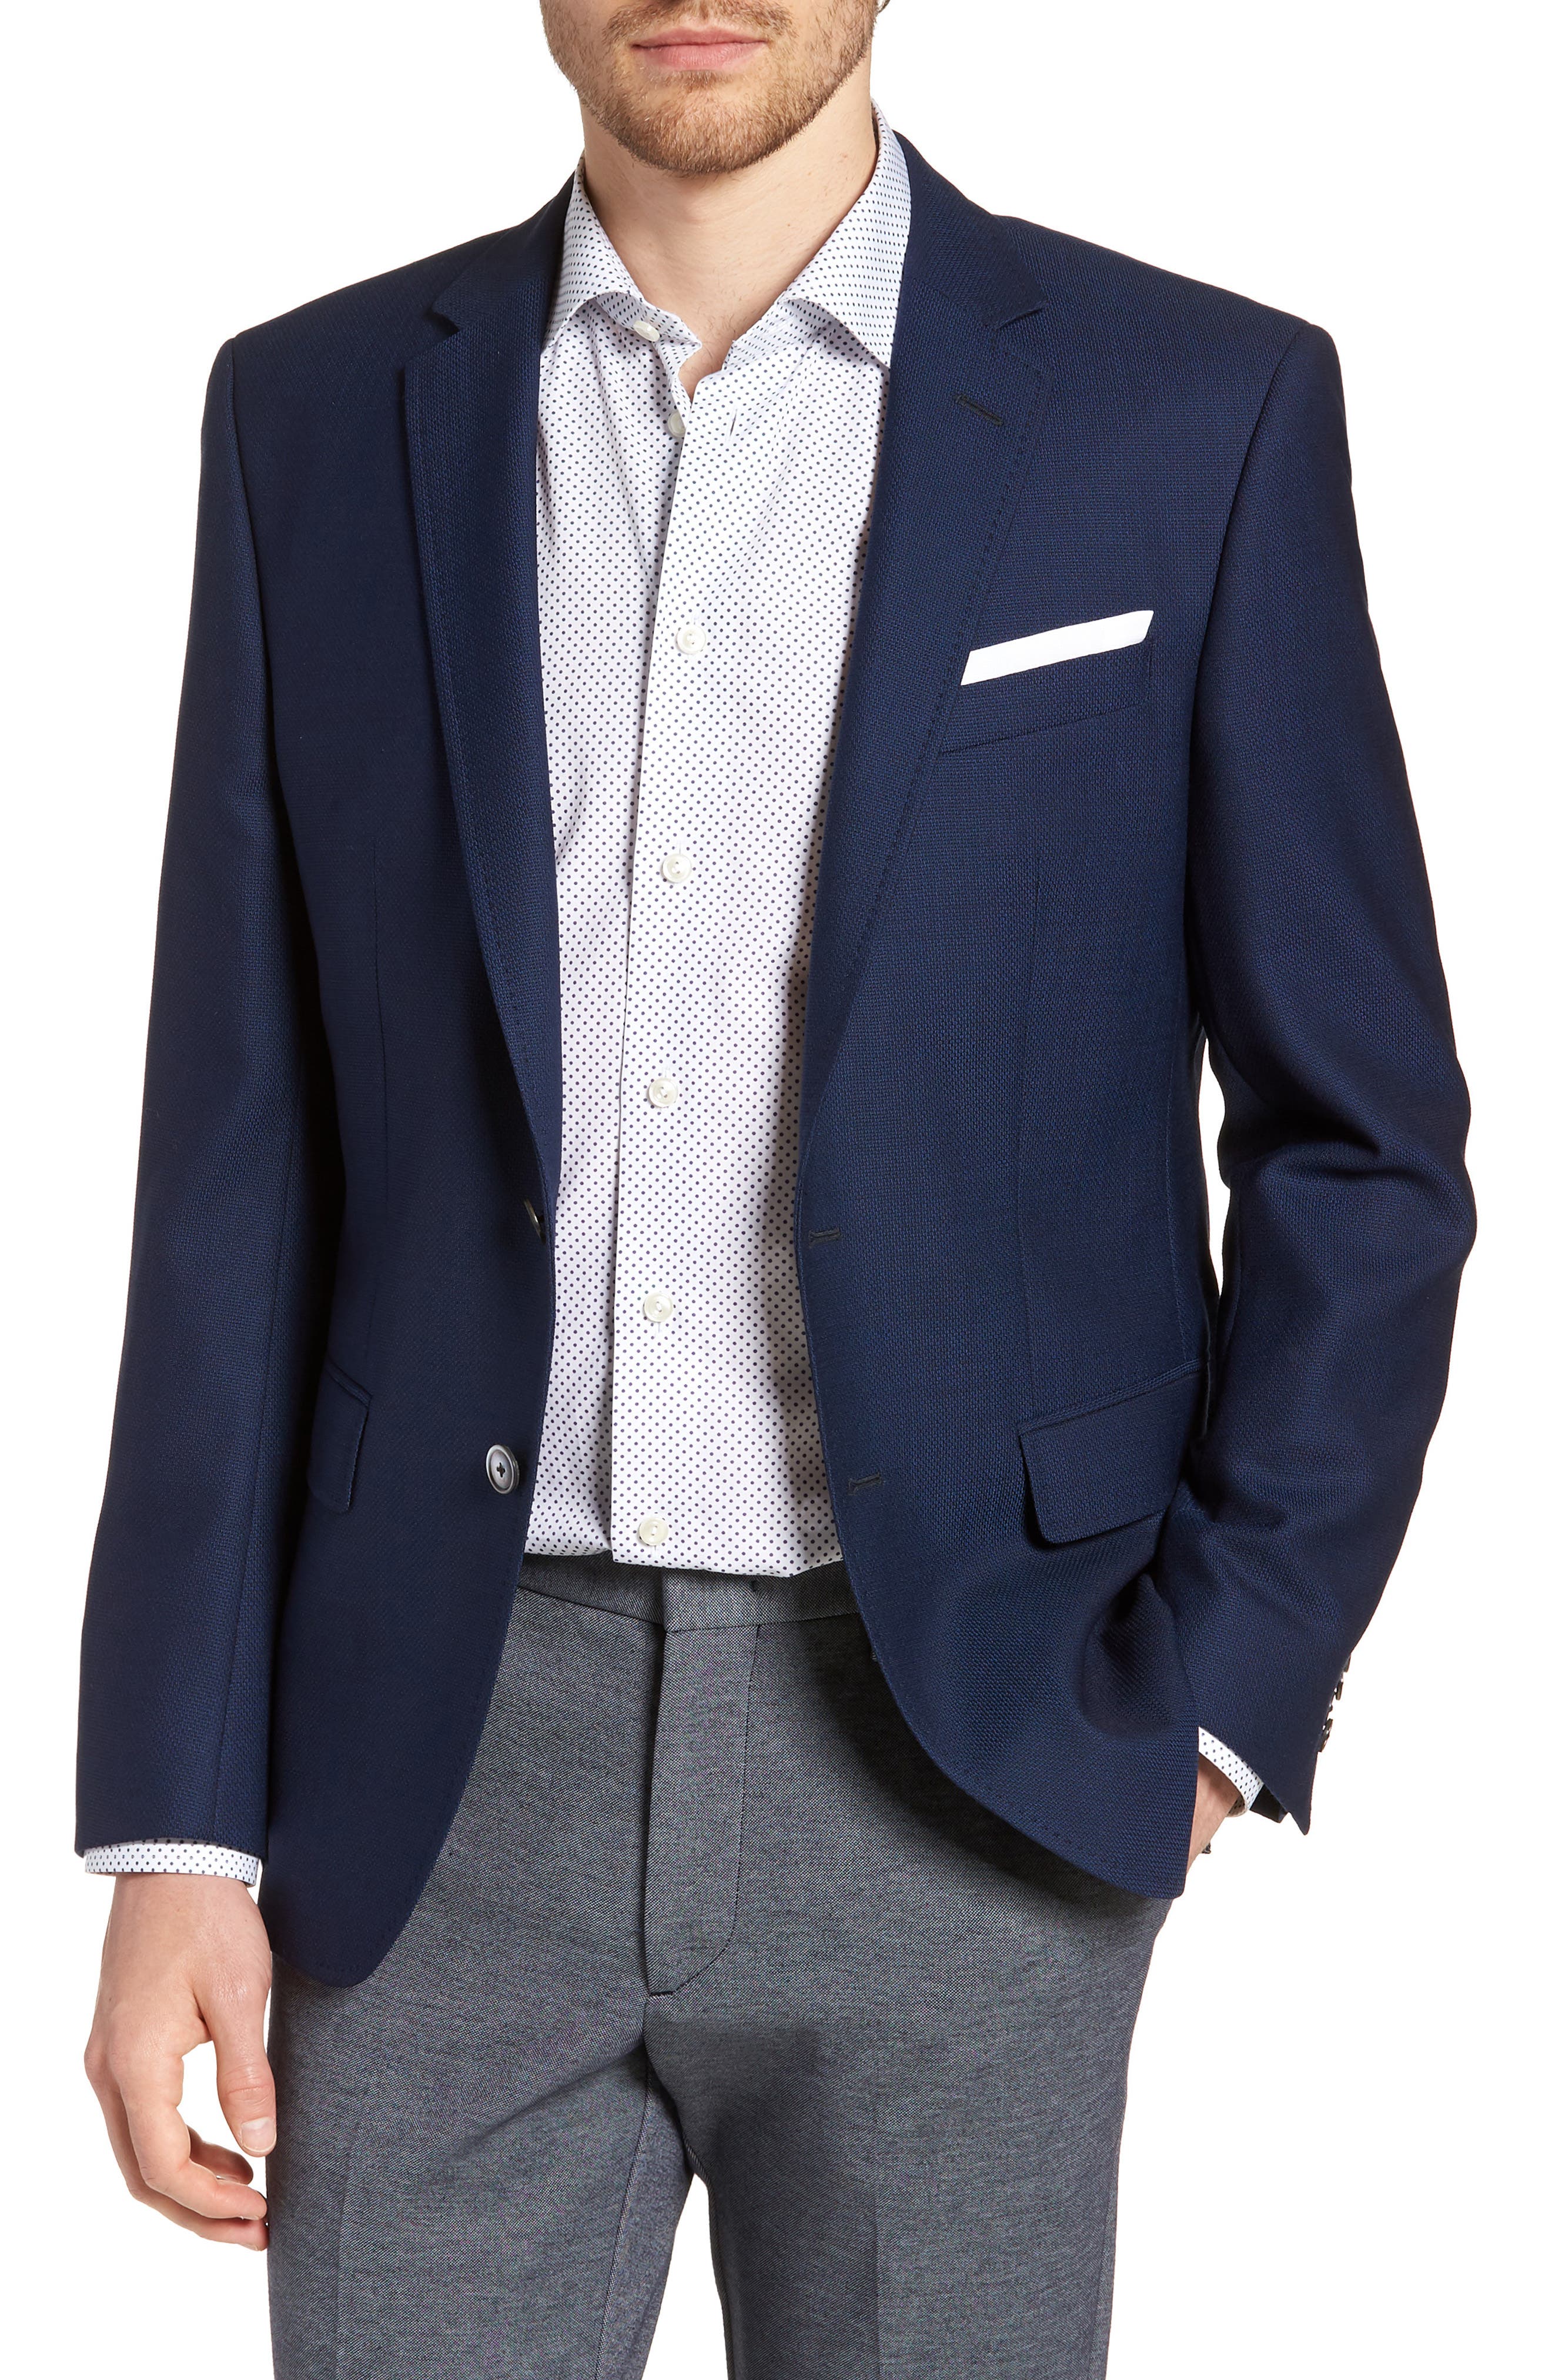 KLGDA Mens Slim Fit Blazer Modern Stretch Suit Separate One Button Long Sleeve Sport Coat Jacket 